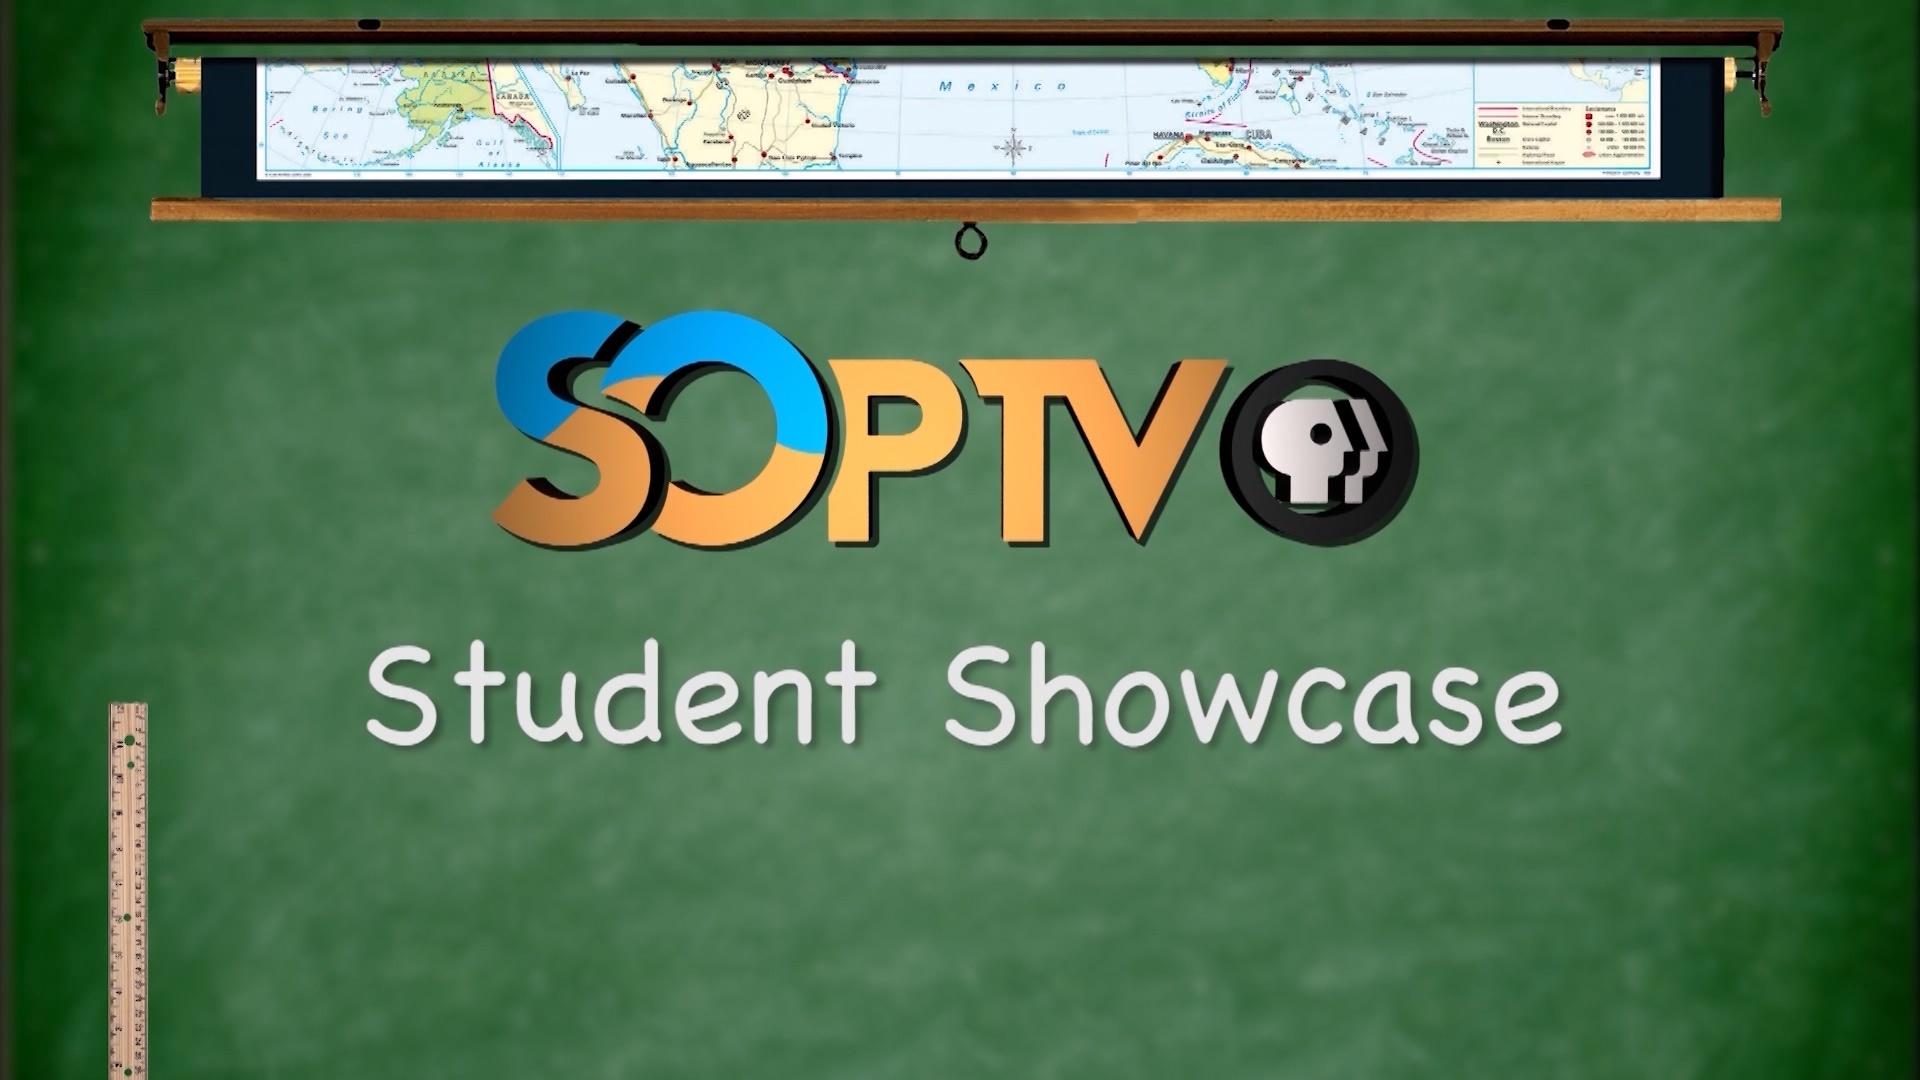 SOPTV Student Showcase Show logo